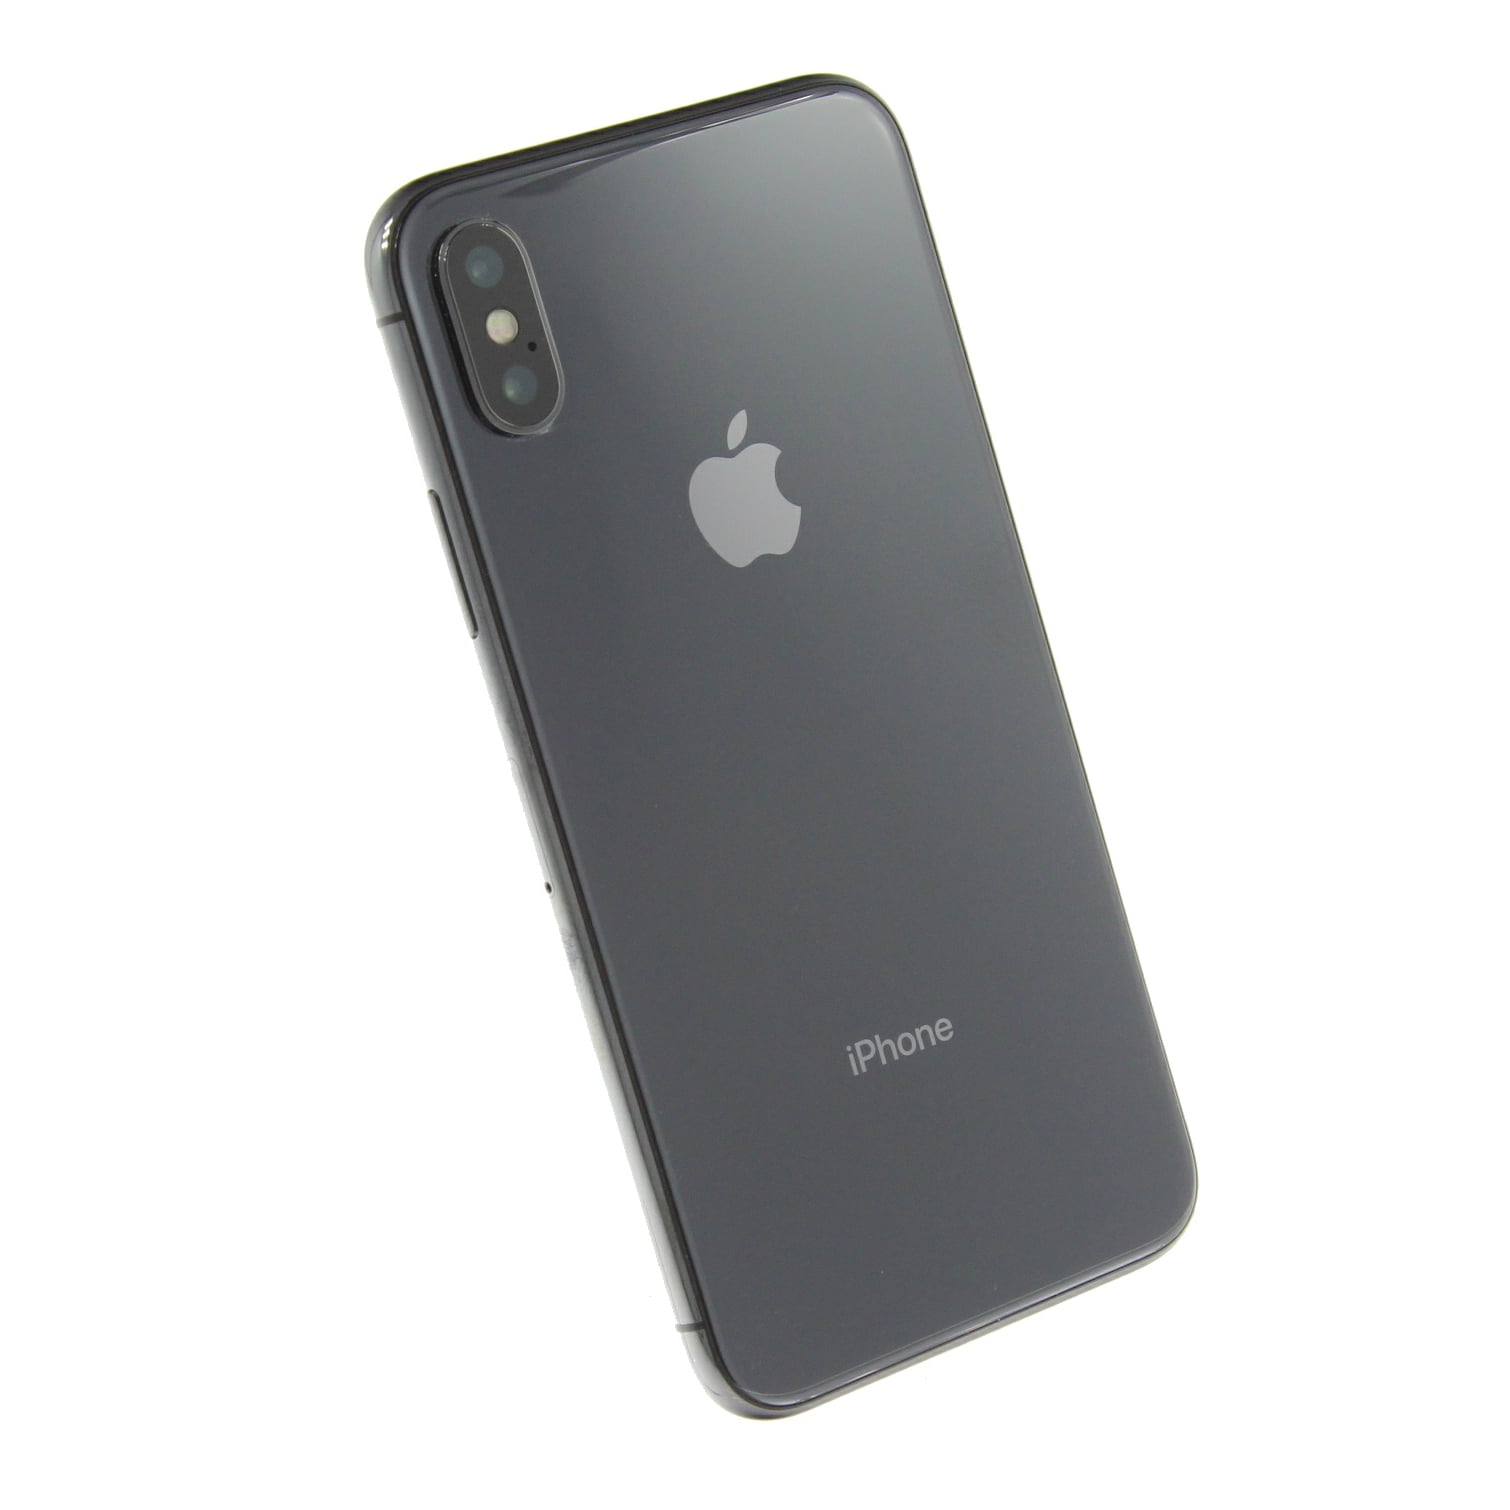 Restored Apple iPhone X a1865 256GB Space Gray Verizon Unlocked 